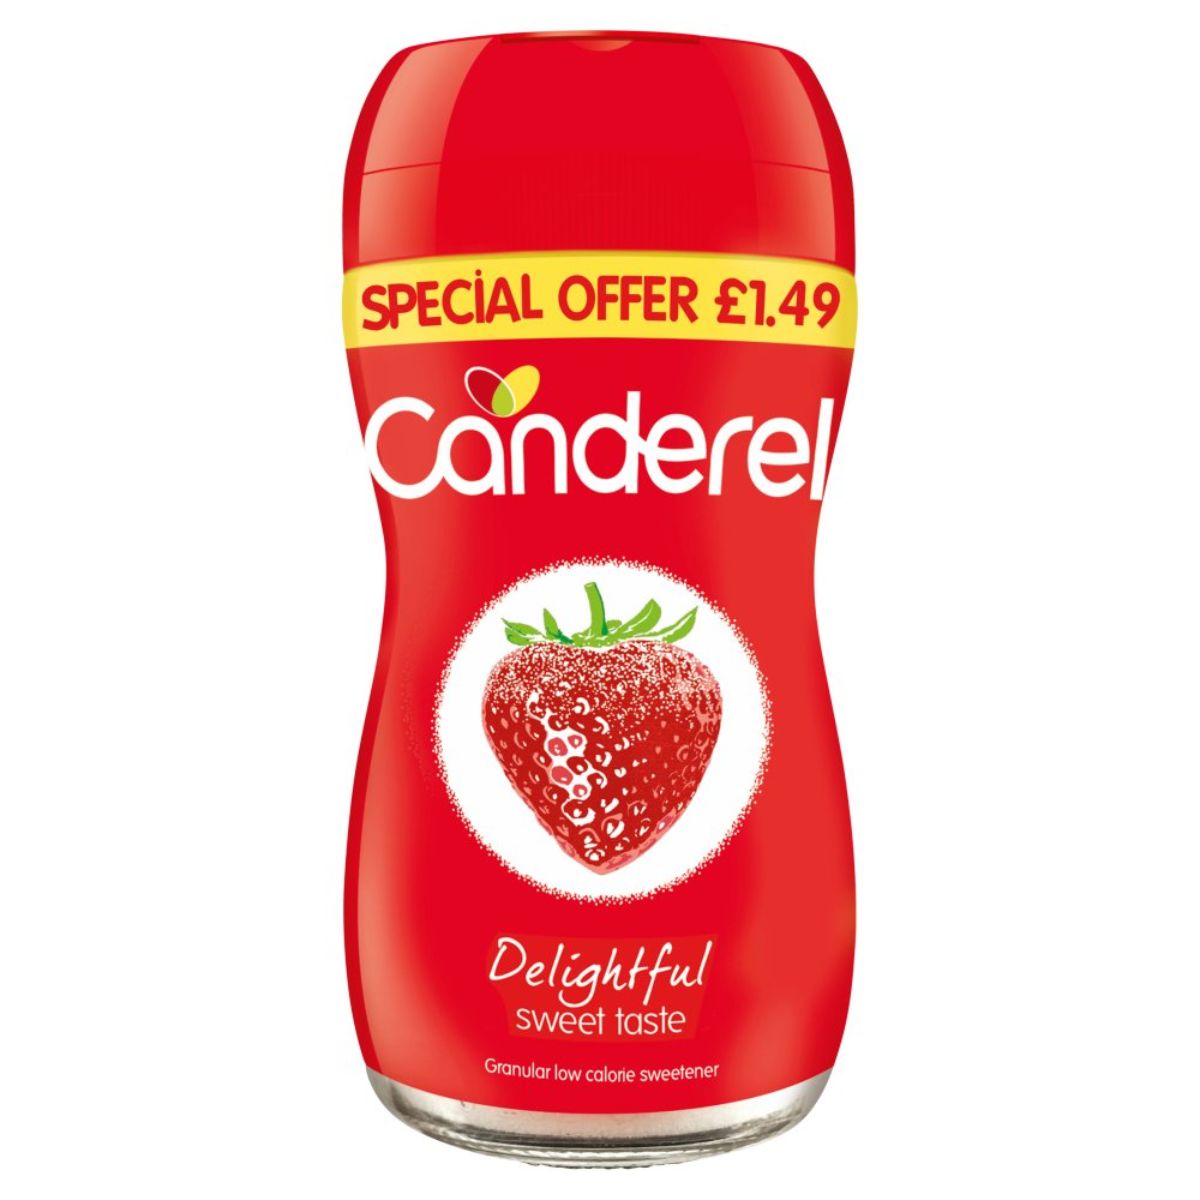 Canderel - Granular Low Calorie Sweetener - 40g strawberry seasoning.